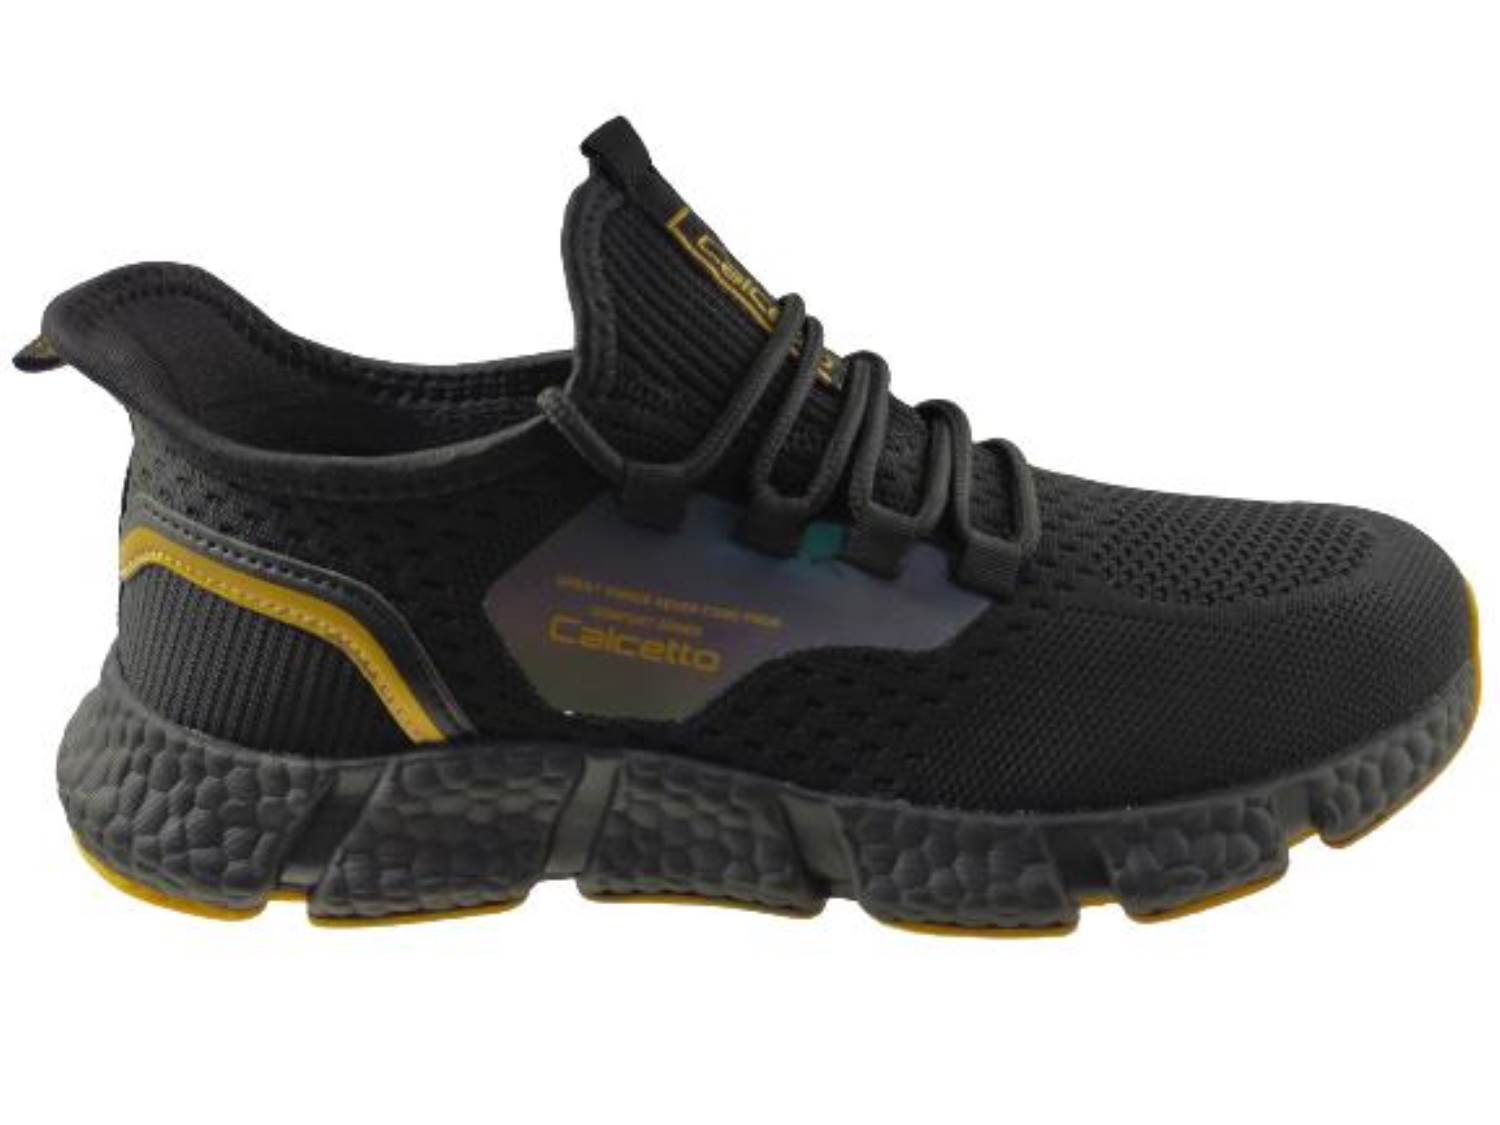 Calcetto Brand Men's CLT0936 Laced Sport Shoes (Black/Gold) RAJASHOES